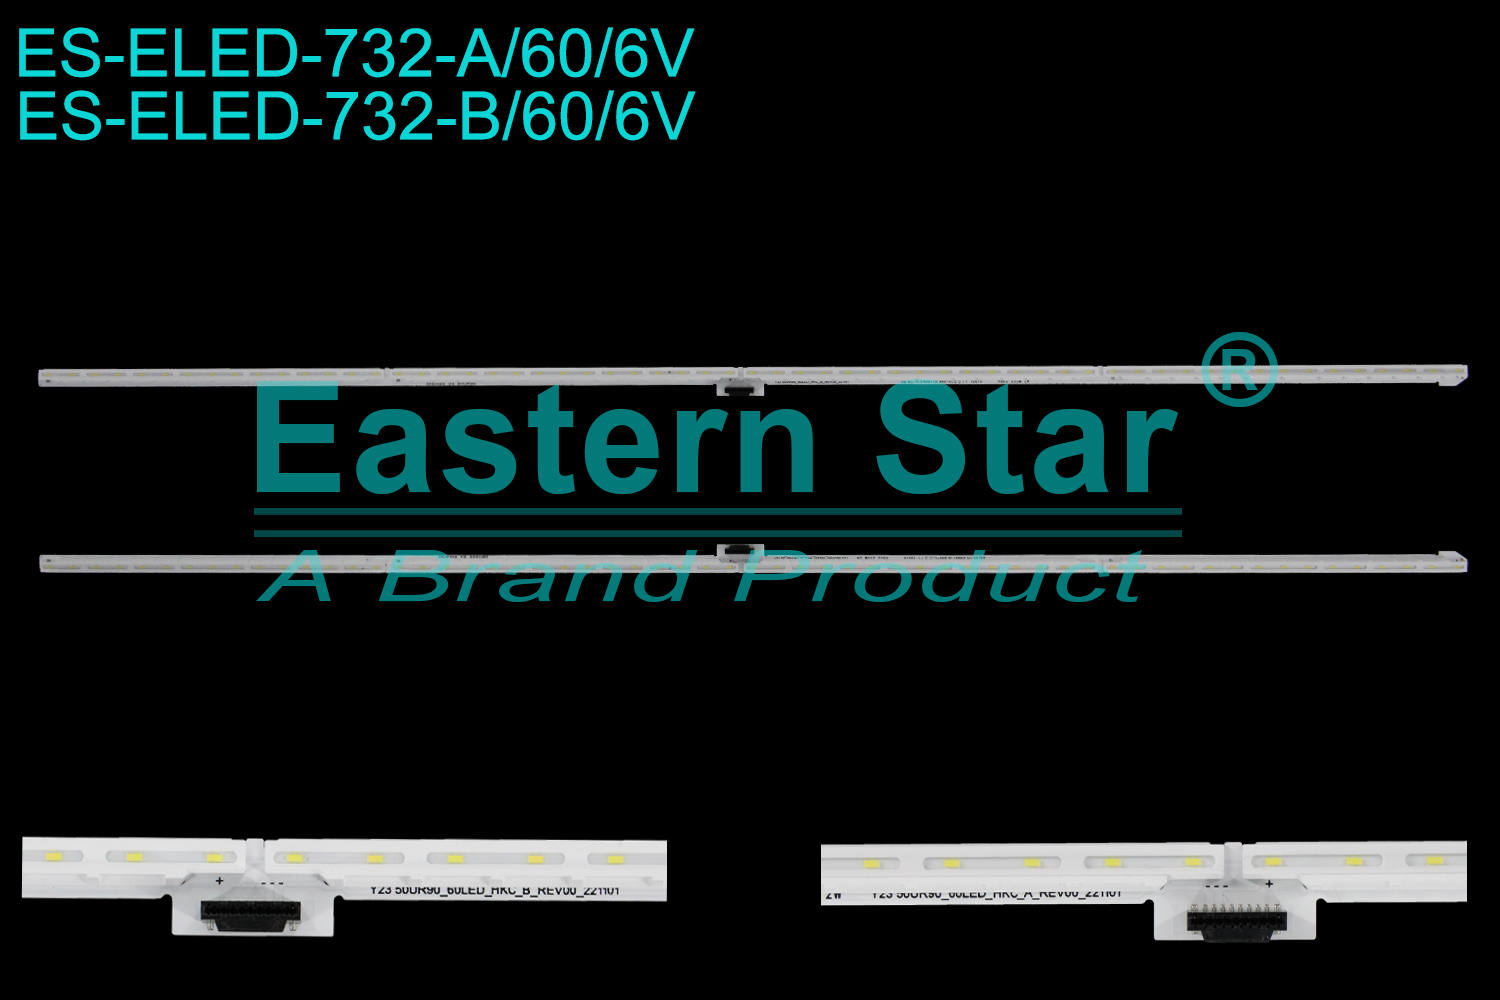 ES-ELED-732 ELED/EDGE TV backlight use for 50'' Lg A:10074 R802 25UM 2W Y23 50UR90_60LED_HKC_A_REV00_221101 DB0228 54 50UR90 B:10075 R802 25UM 2W Y23 50UR90_60LED_HKC_B_REV00_221101 DH0428 34 50UR90 LED STRIPS(/)